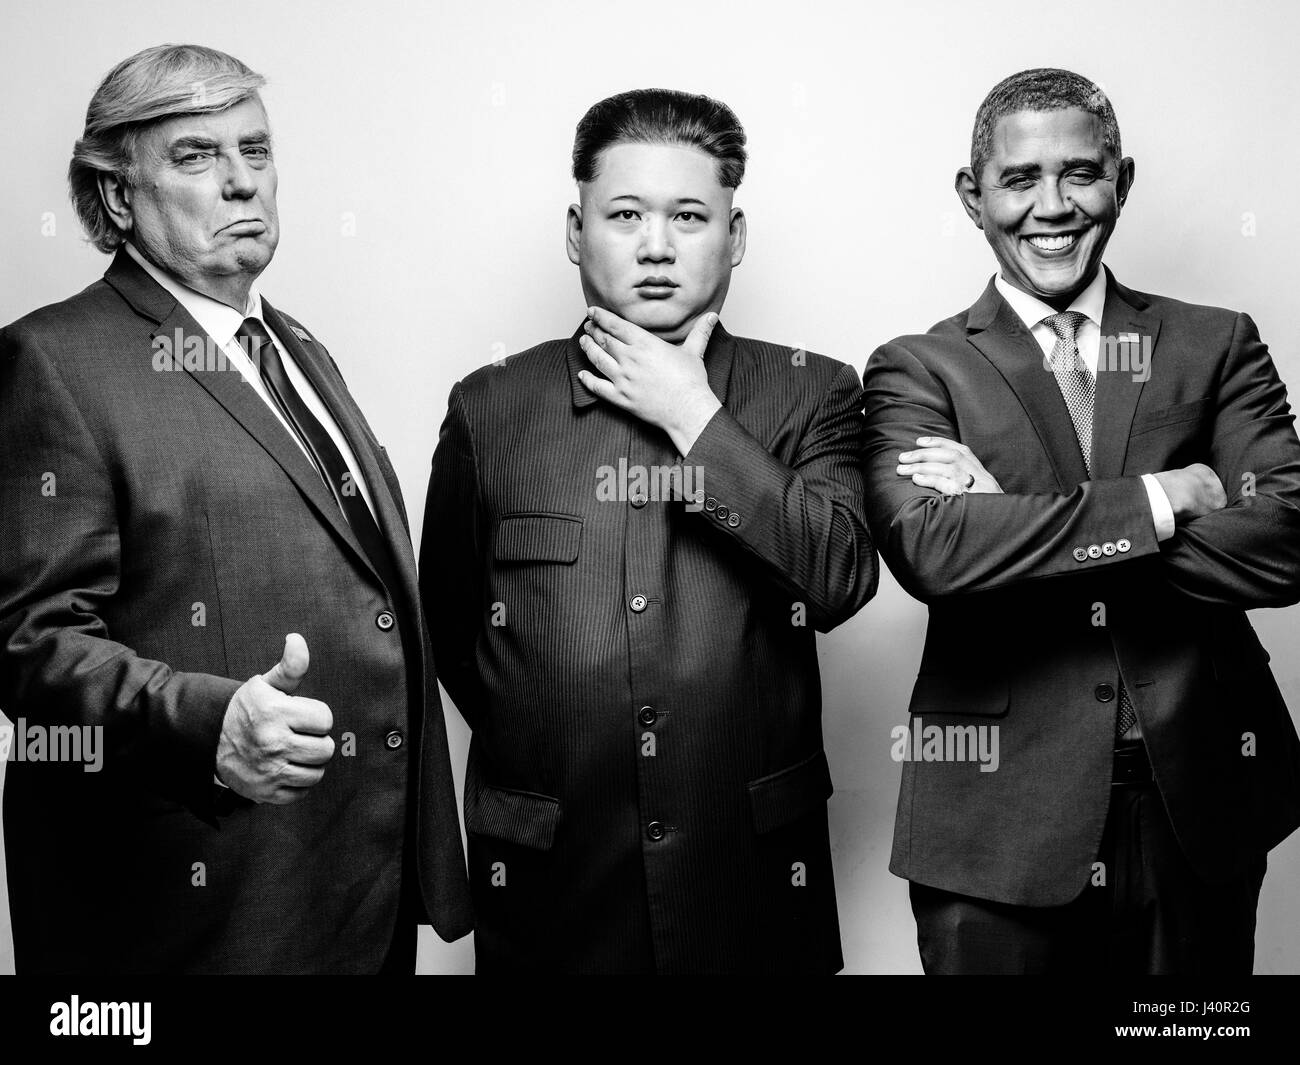 President Donald J Trump, President Barack Obama and Supreme Leader of North Korea Kim Jong-Un lookalikes meet for a photoshoot in Hong Kong. Stock Photo